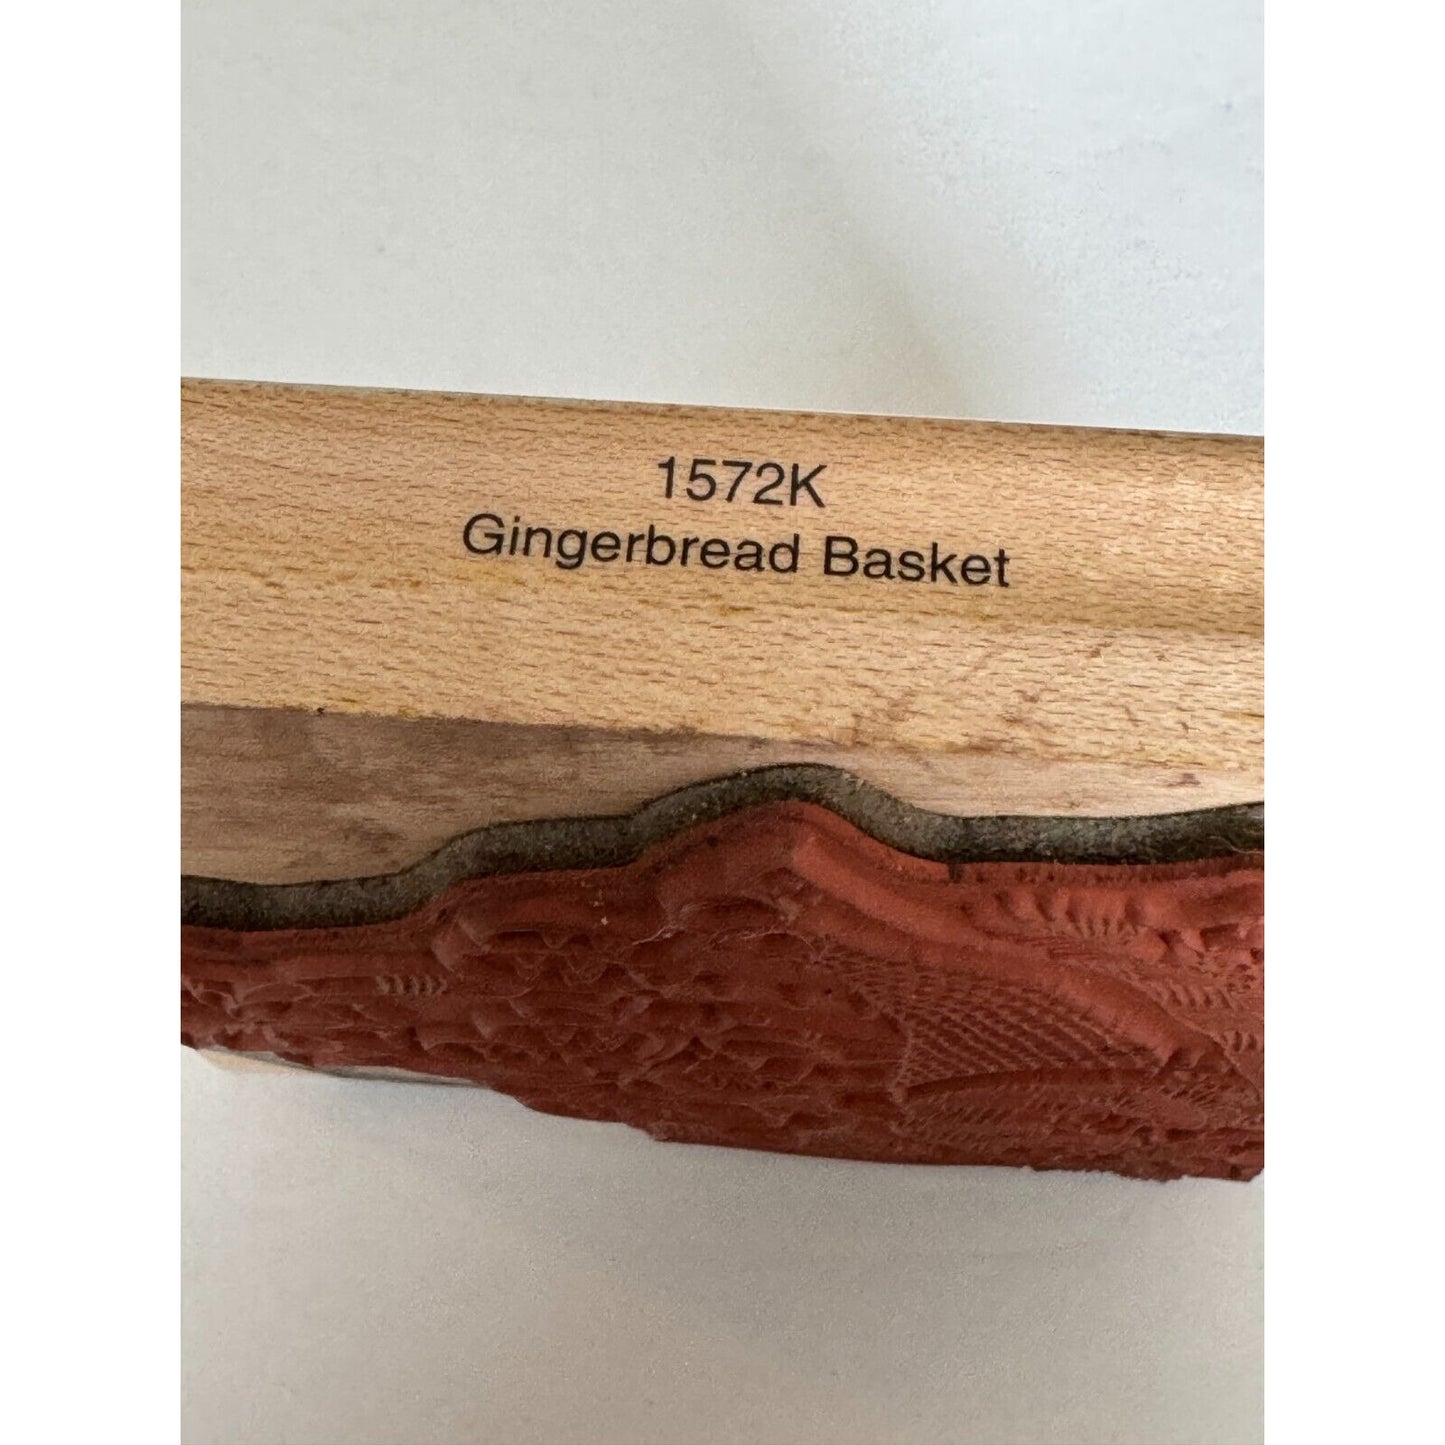 Penny Black Rubber Stamp Gingerbread Basket Christmas Card Holiday Baking Big